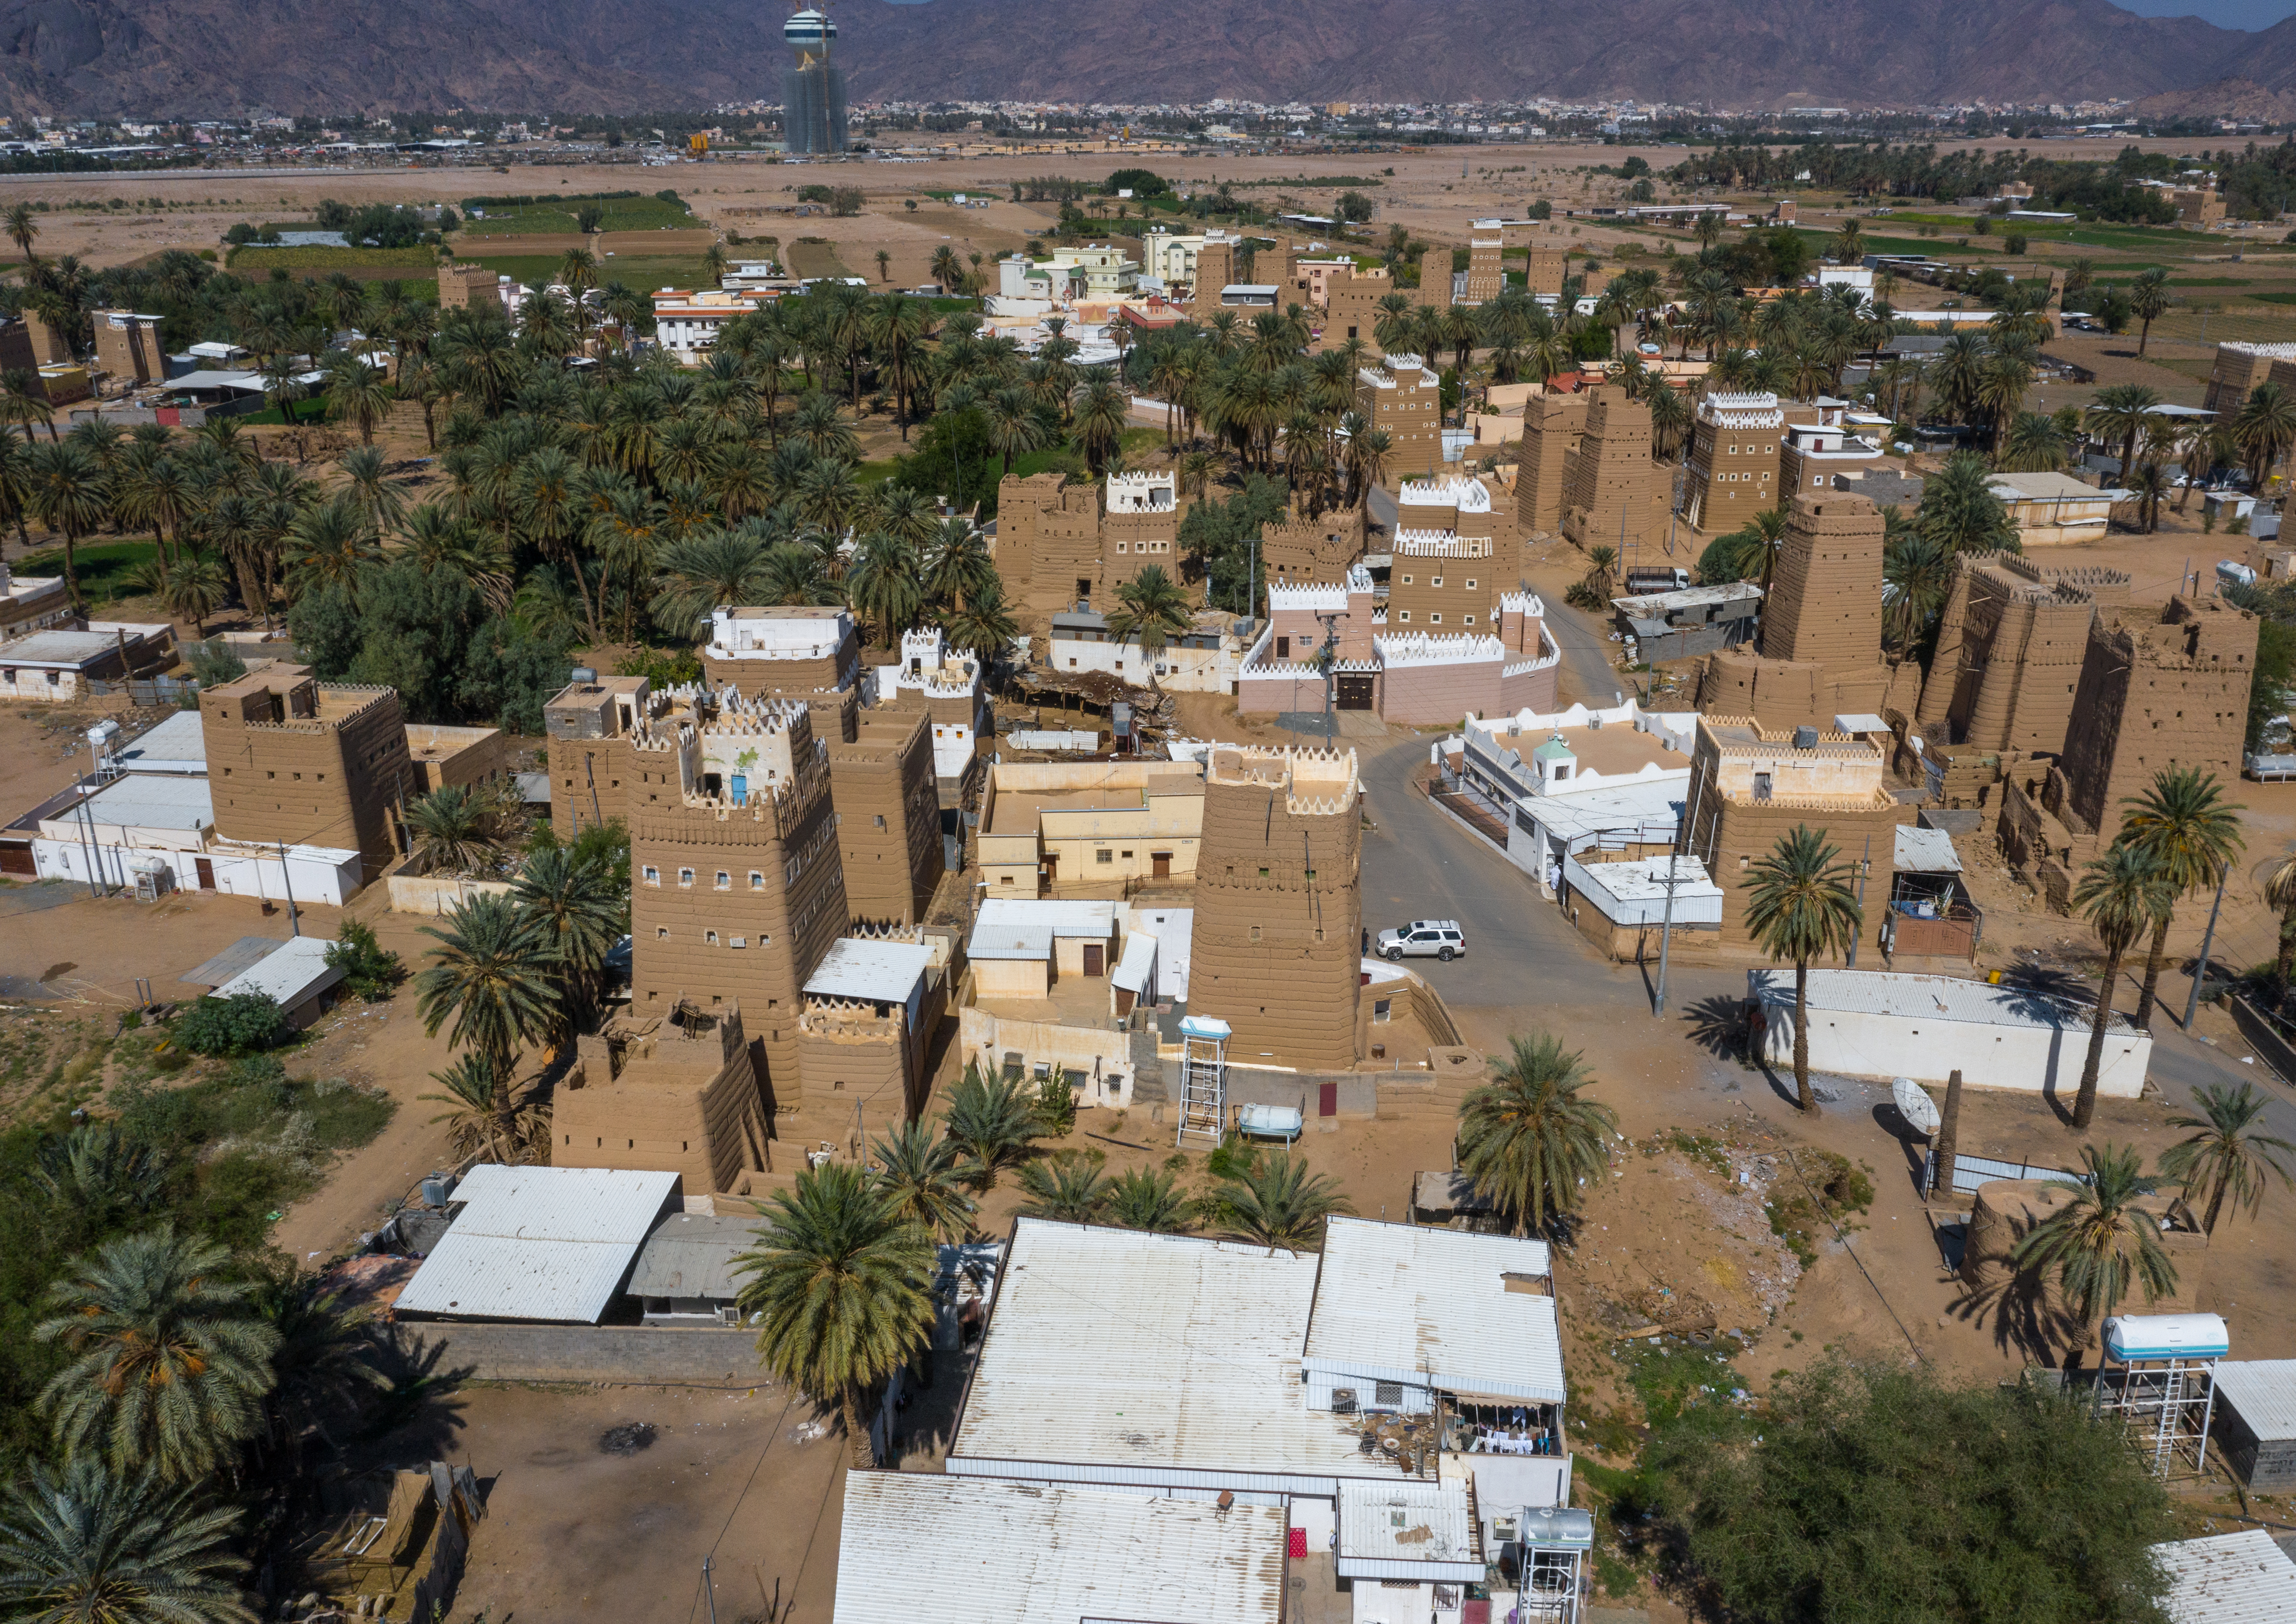  Ancient village close to the south-western city of Najran, Saudi Arabia (photo: Eric Lafforgue)